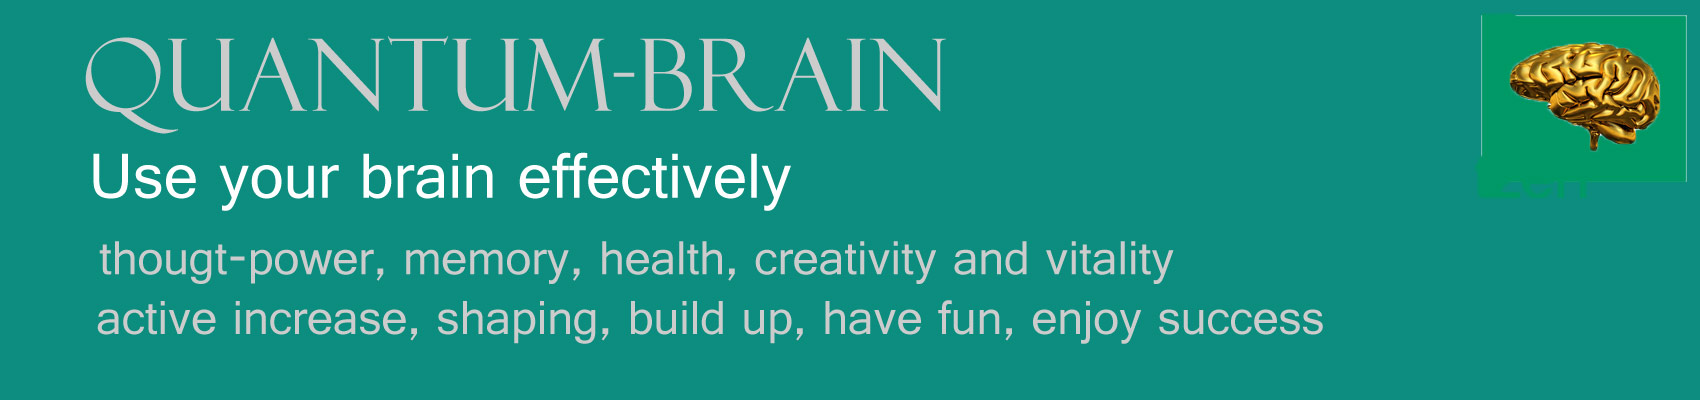 quantum-brain, quantum brain, use your brain effectively, enjoy, health brain, thoughtpower, think, creativity, success, increase intelligence